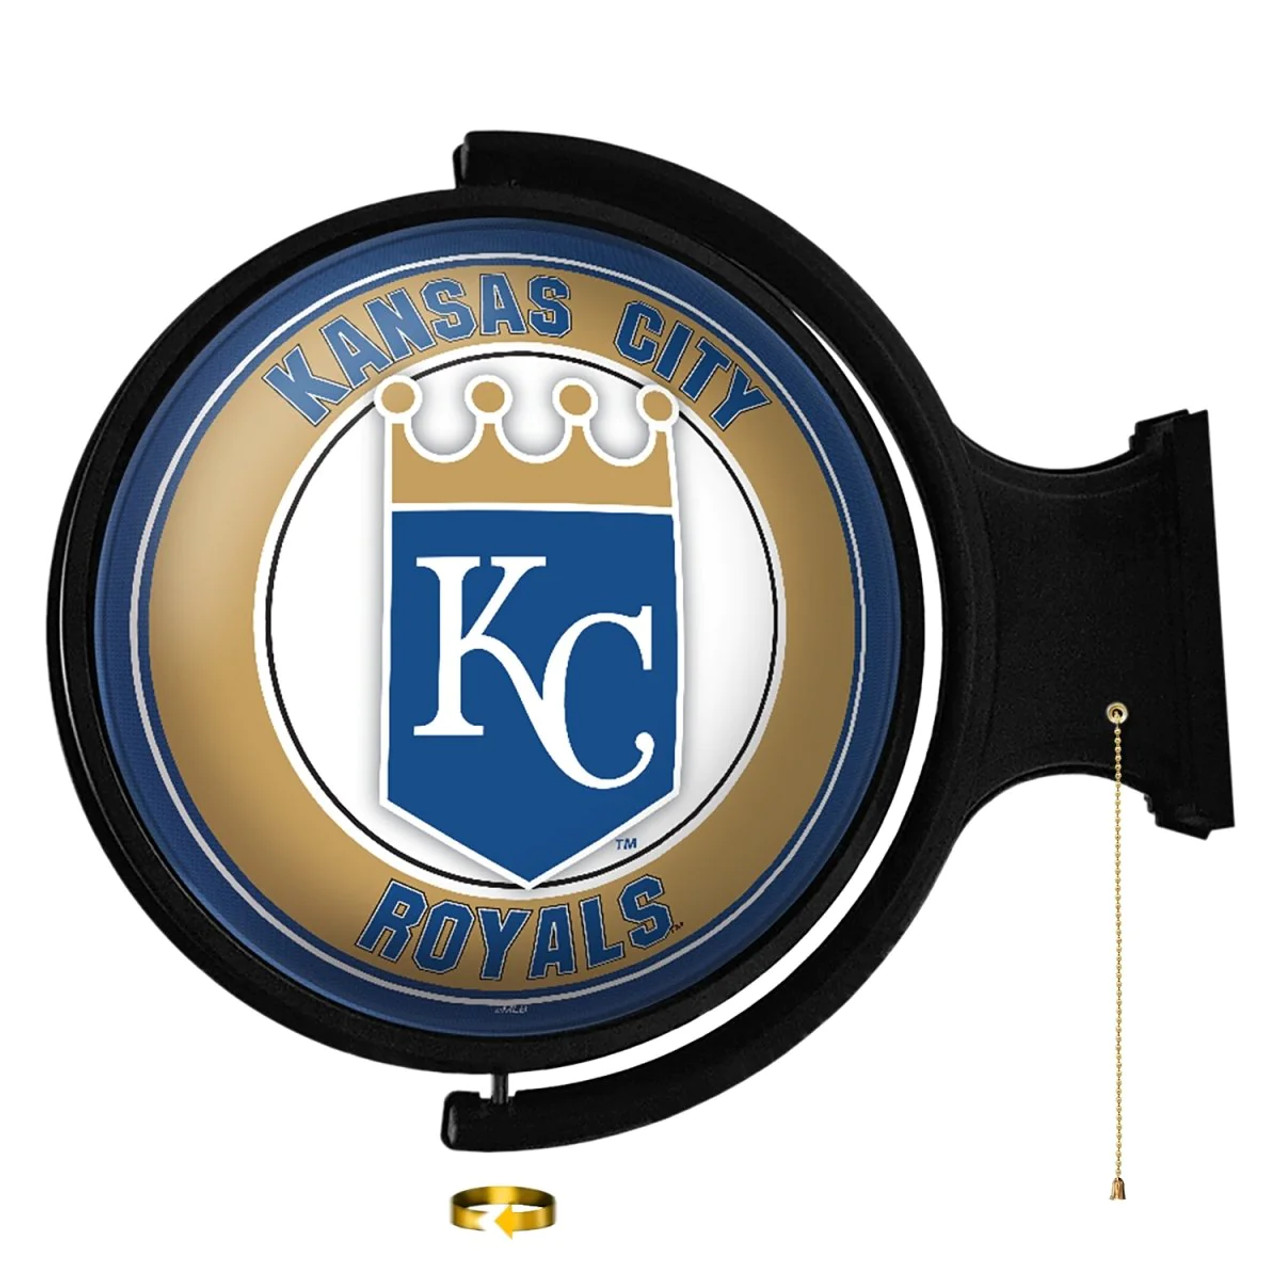 MBKCTY-115-01A, KCR, KC, Kansas City, Royals, KS,  Original, Round, Rotating, Lighted, Wall, Sign, The Fan-Brand, 704384951315, LED